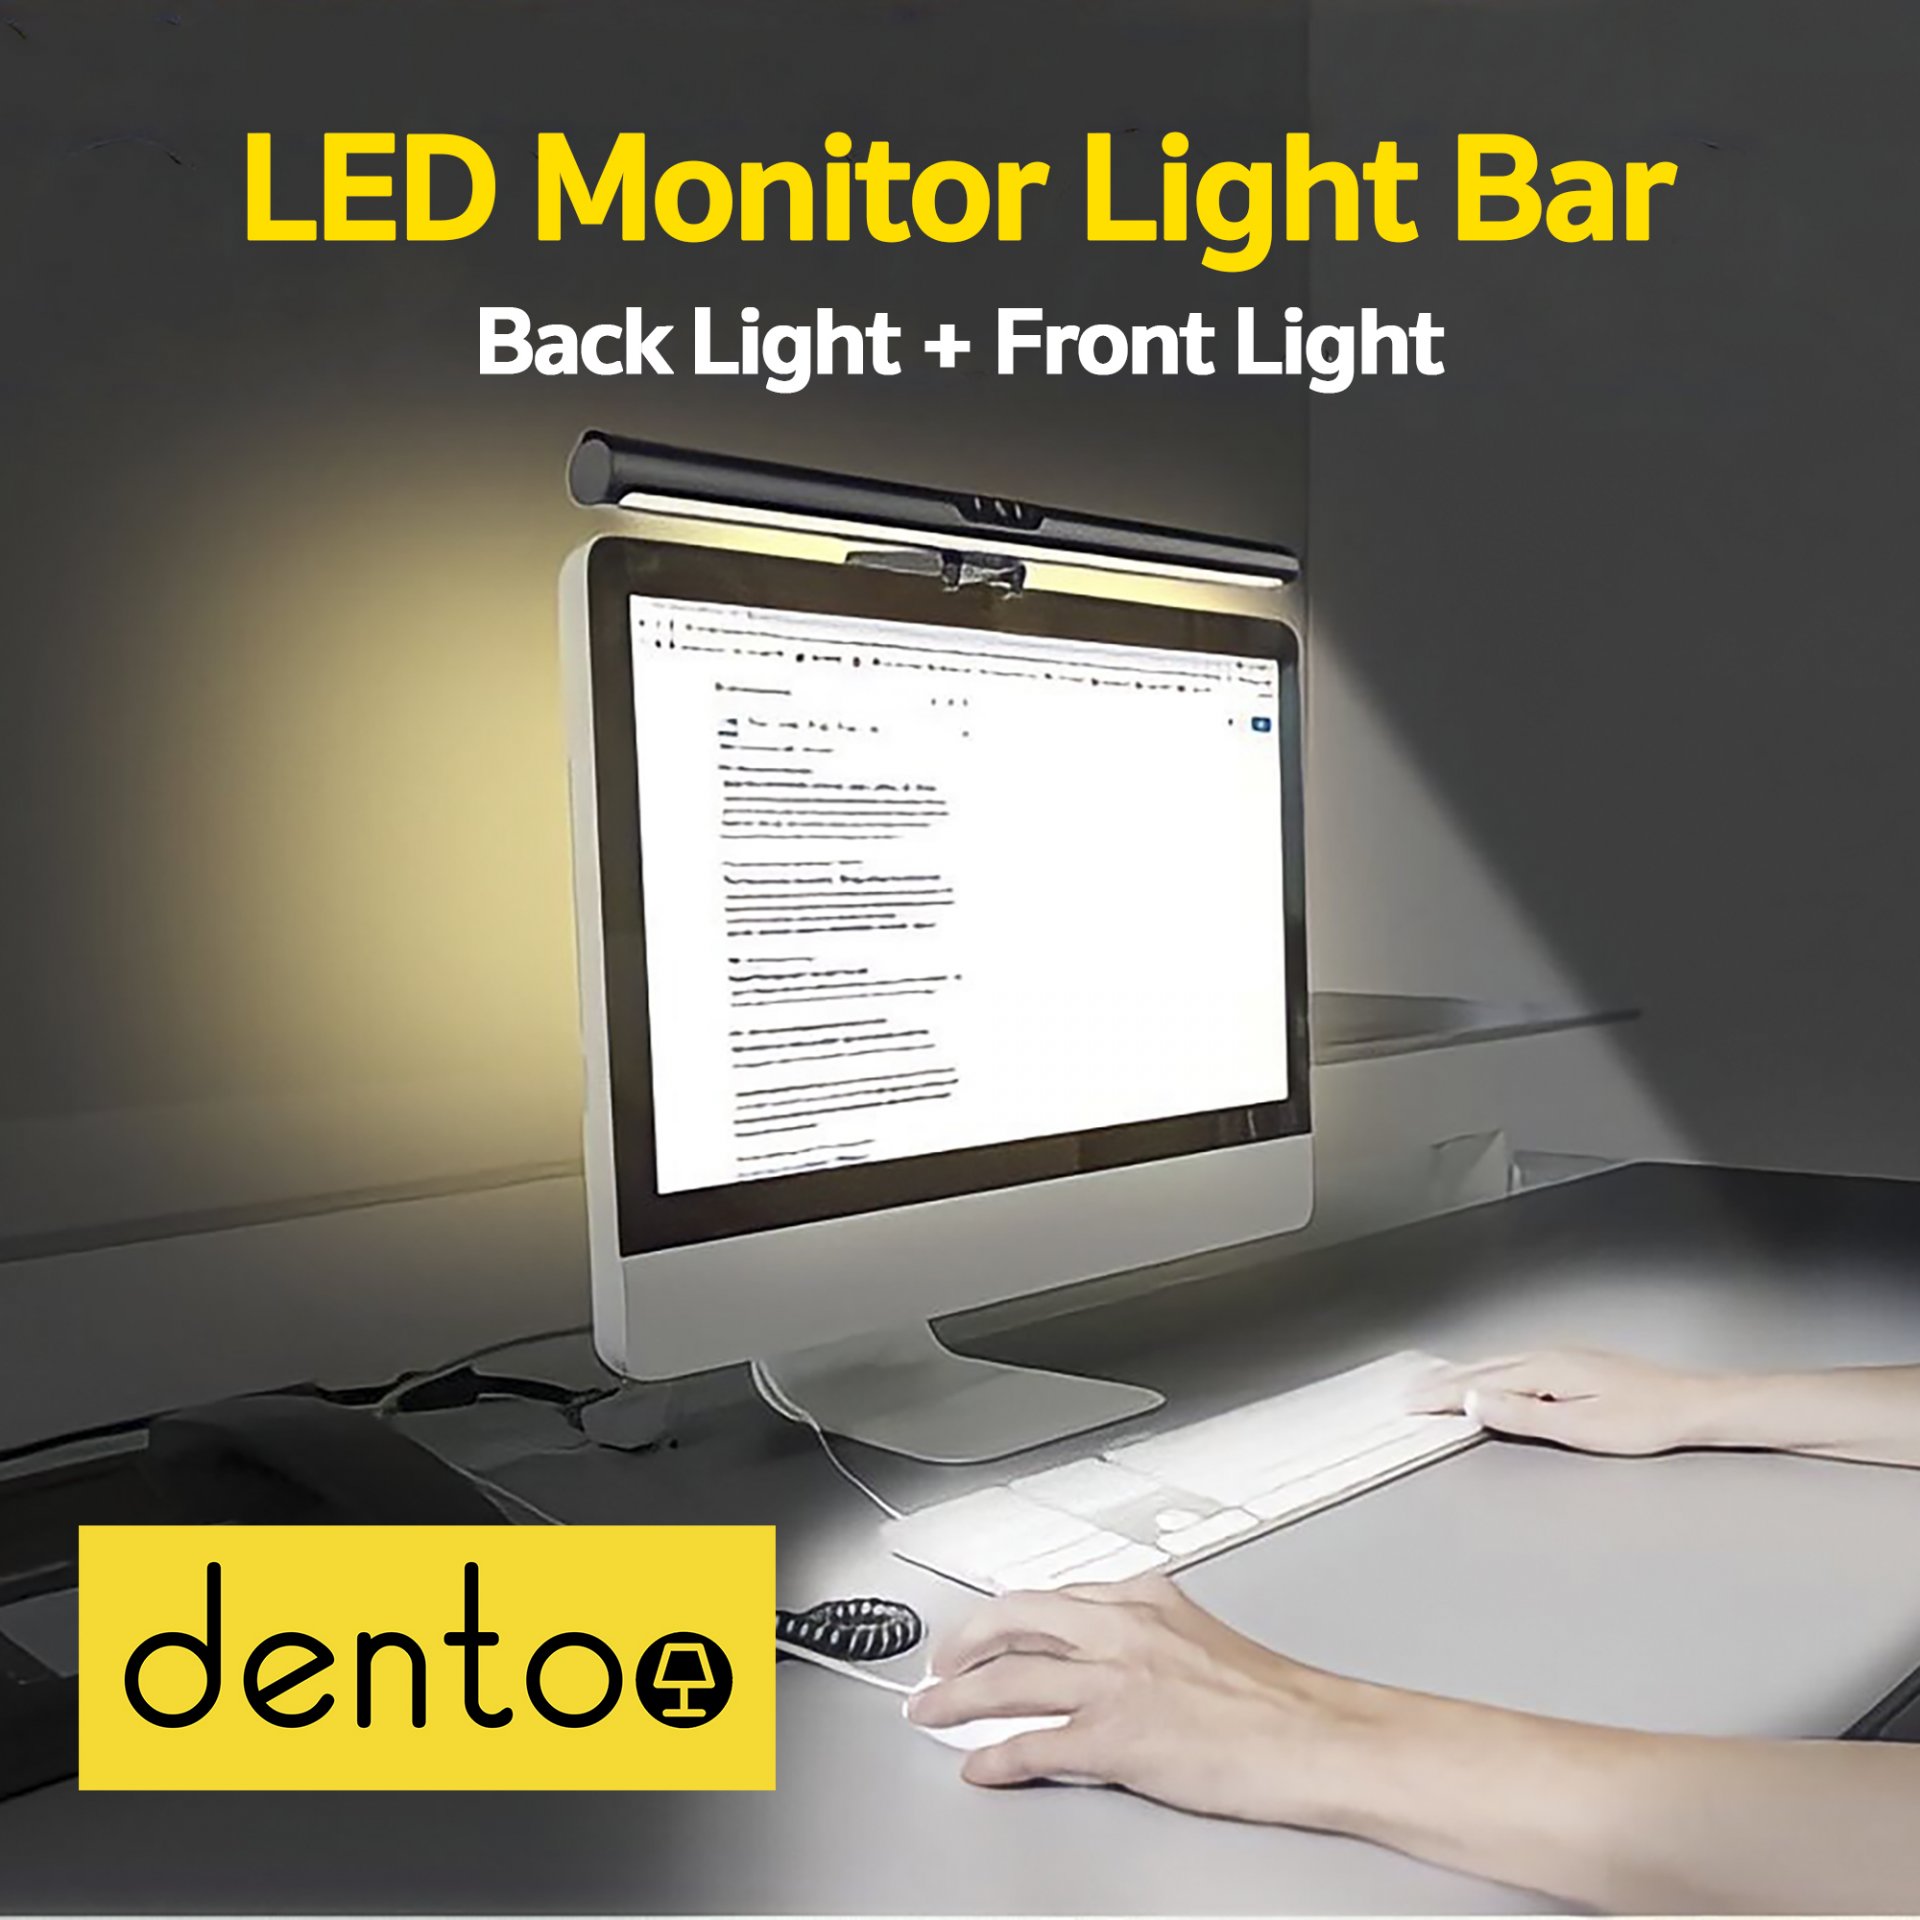 LED Monitor Light Bar